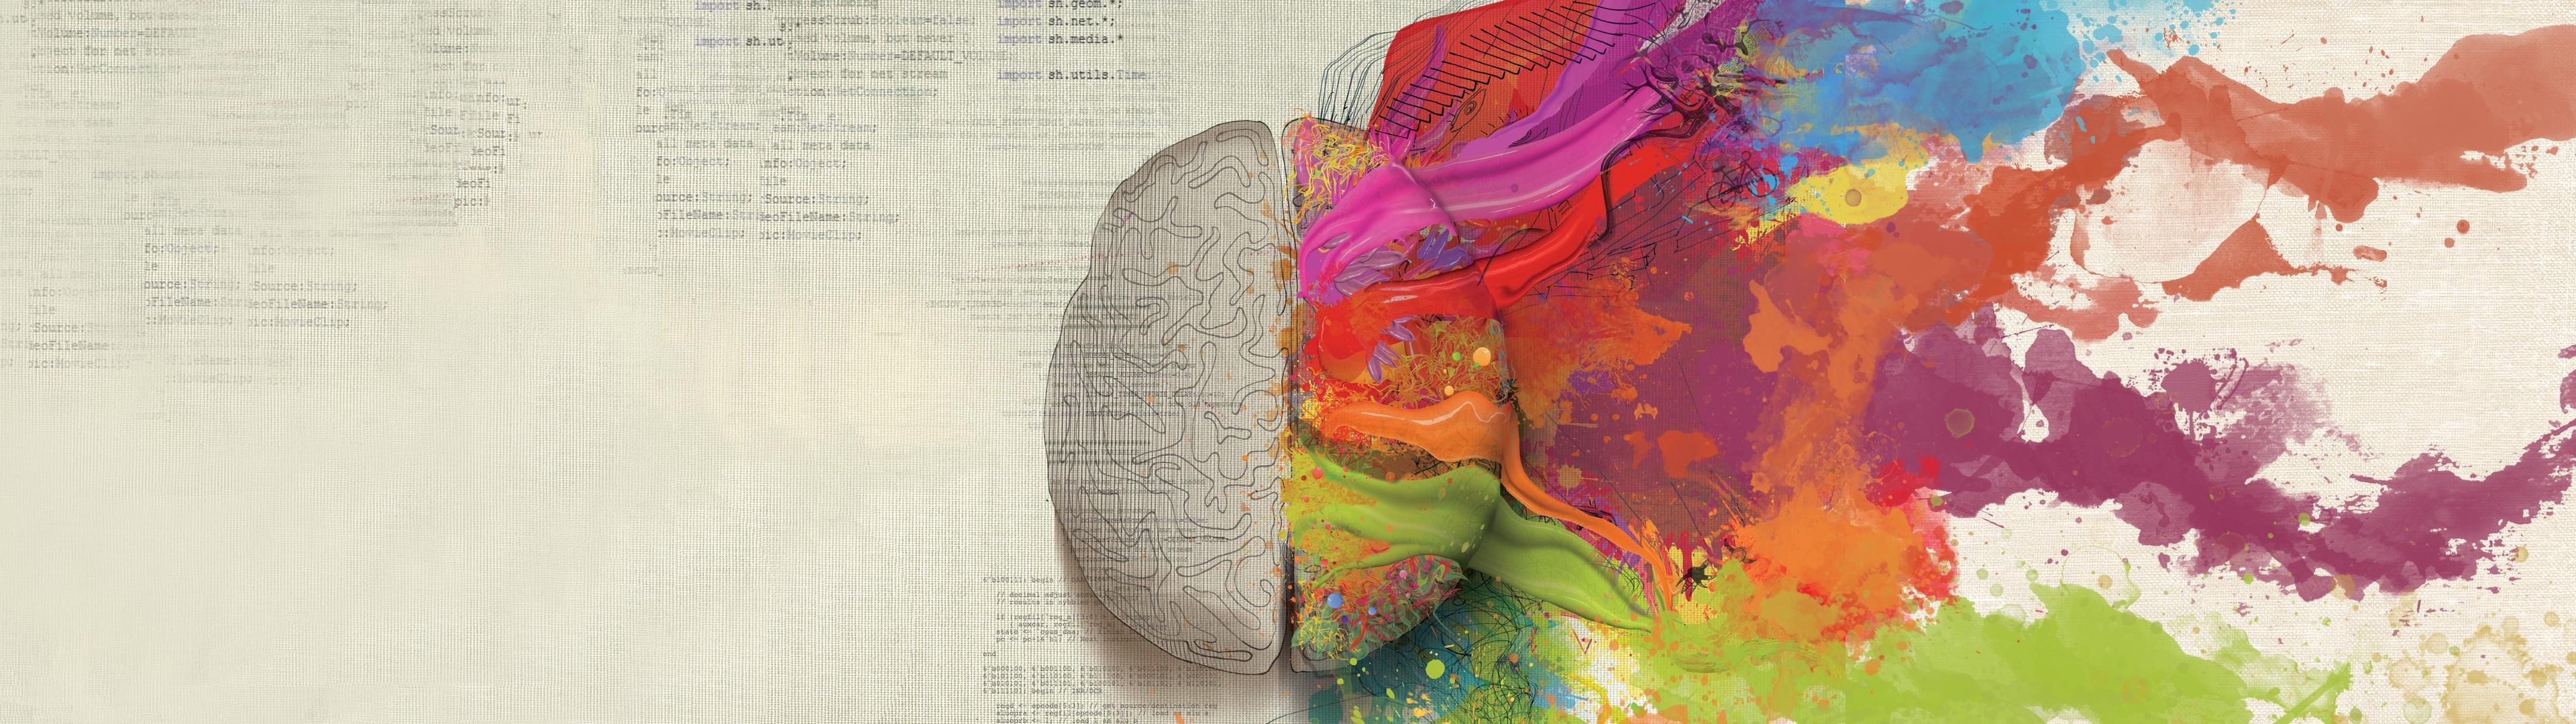 Brain Wallpapers Wallpaper Cave